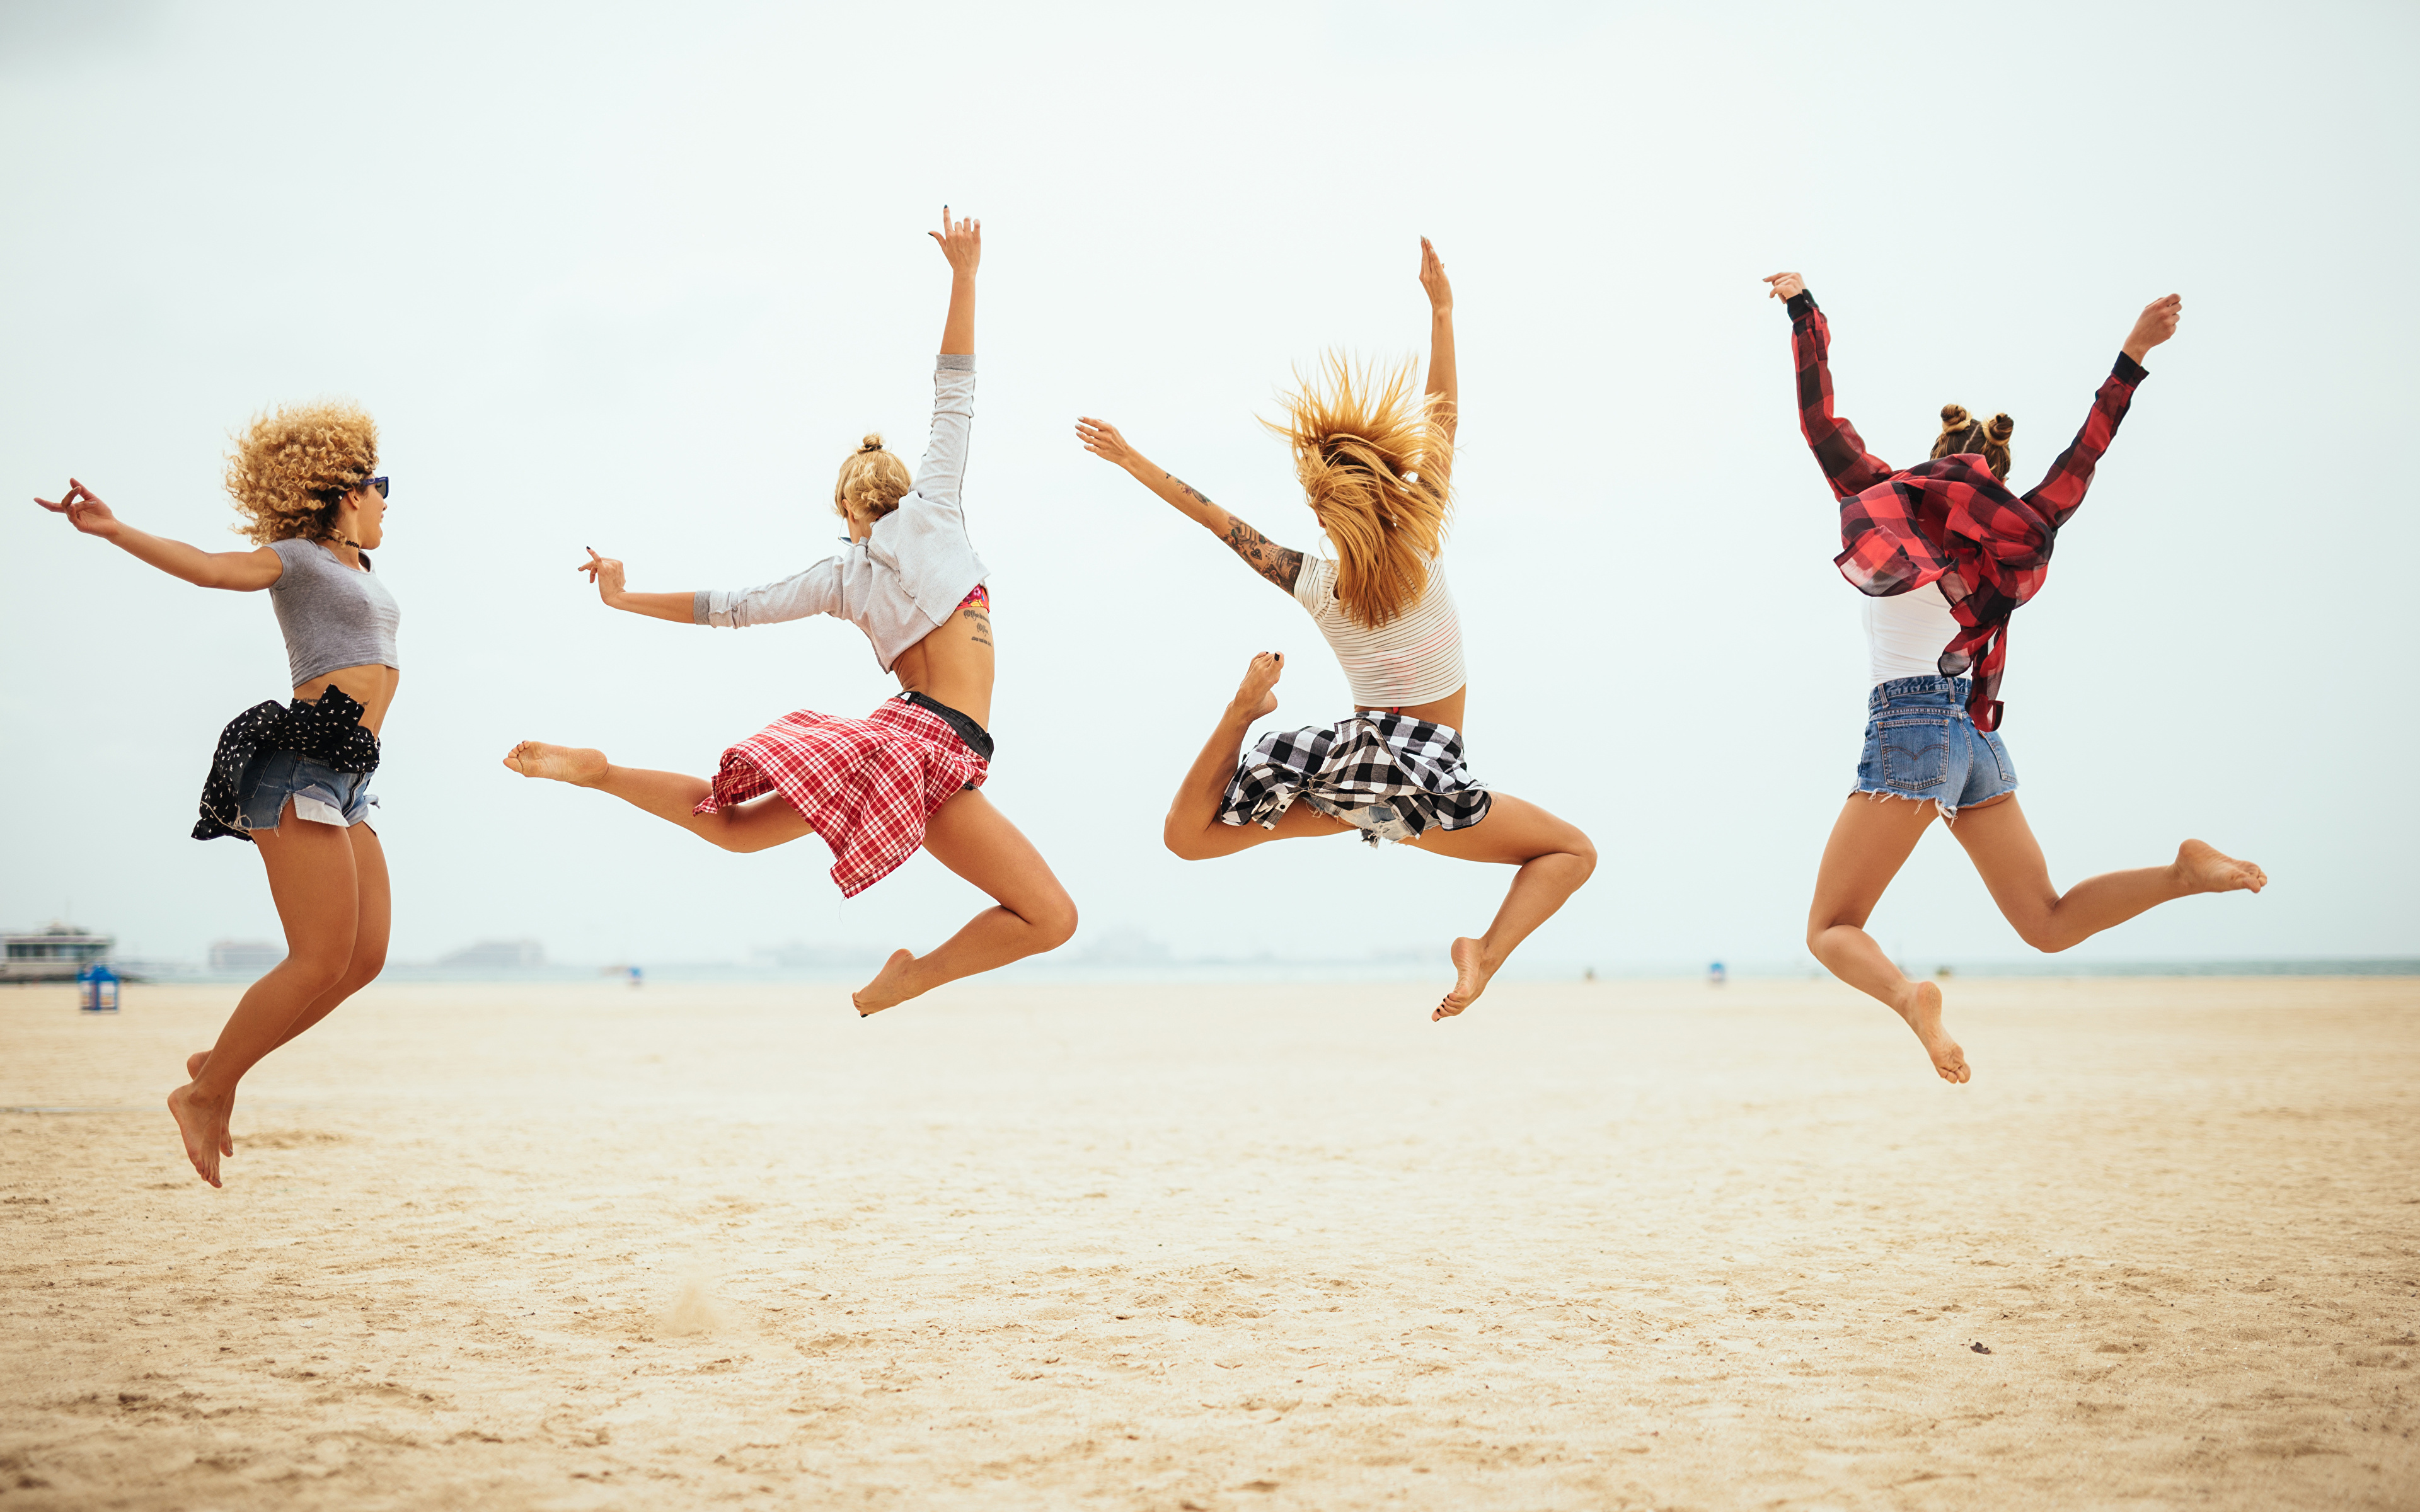 Jumping girls photo